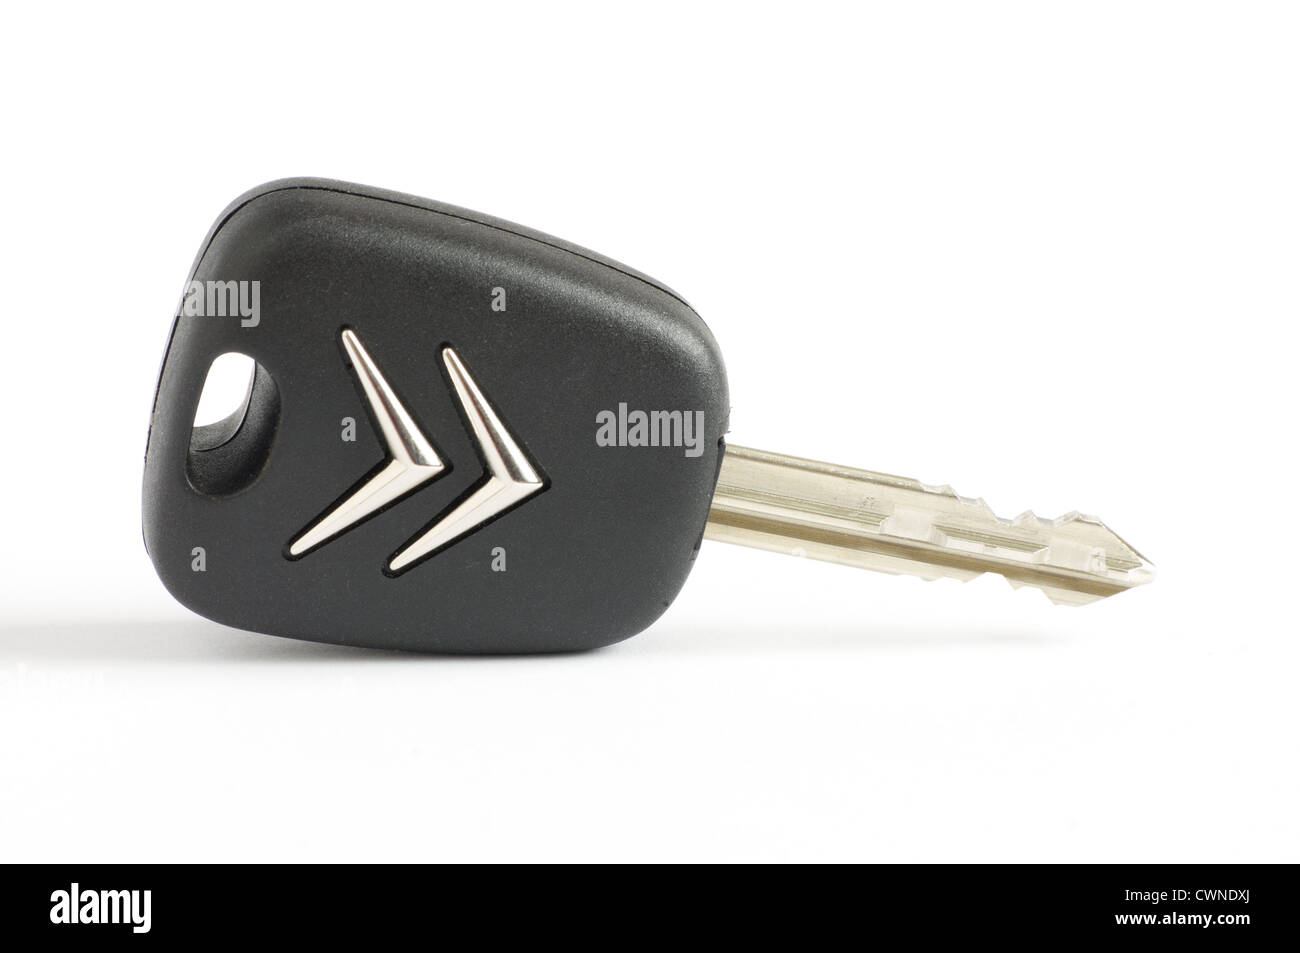 Citroen car key on a white back ground Stock Photo